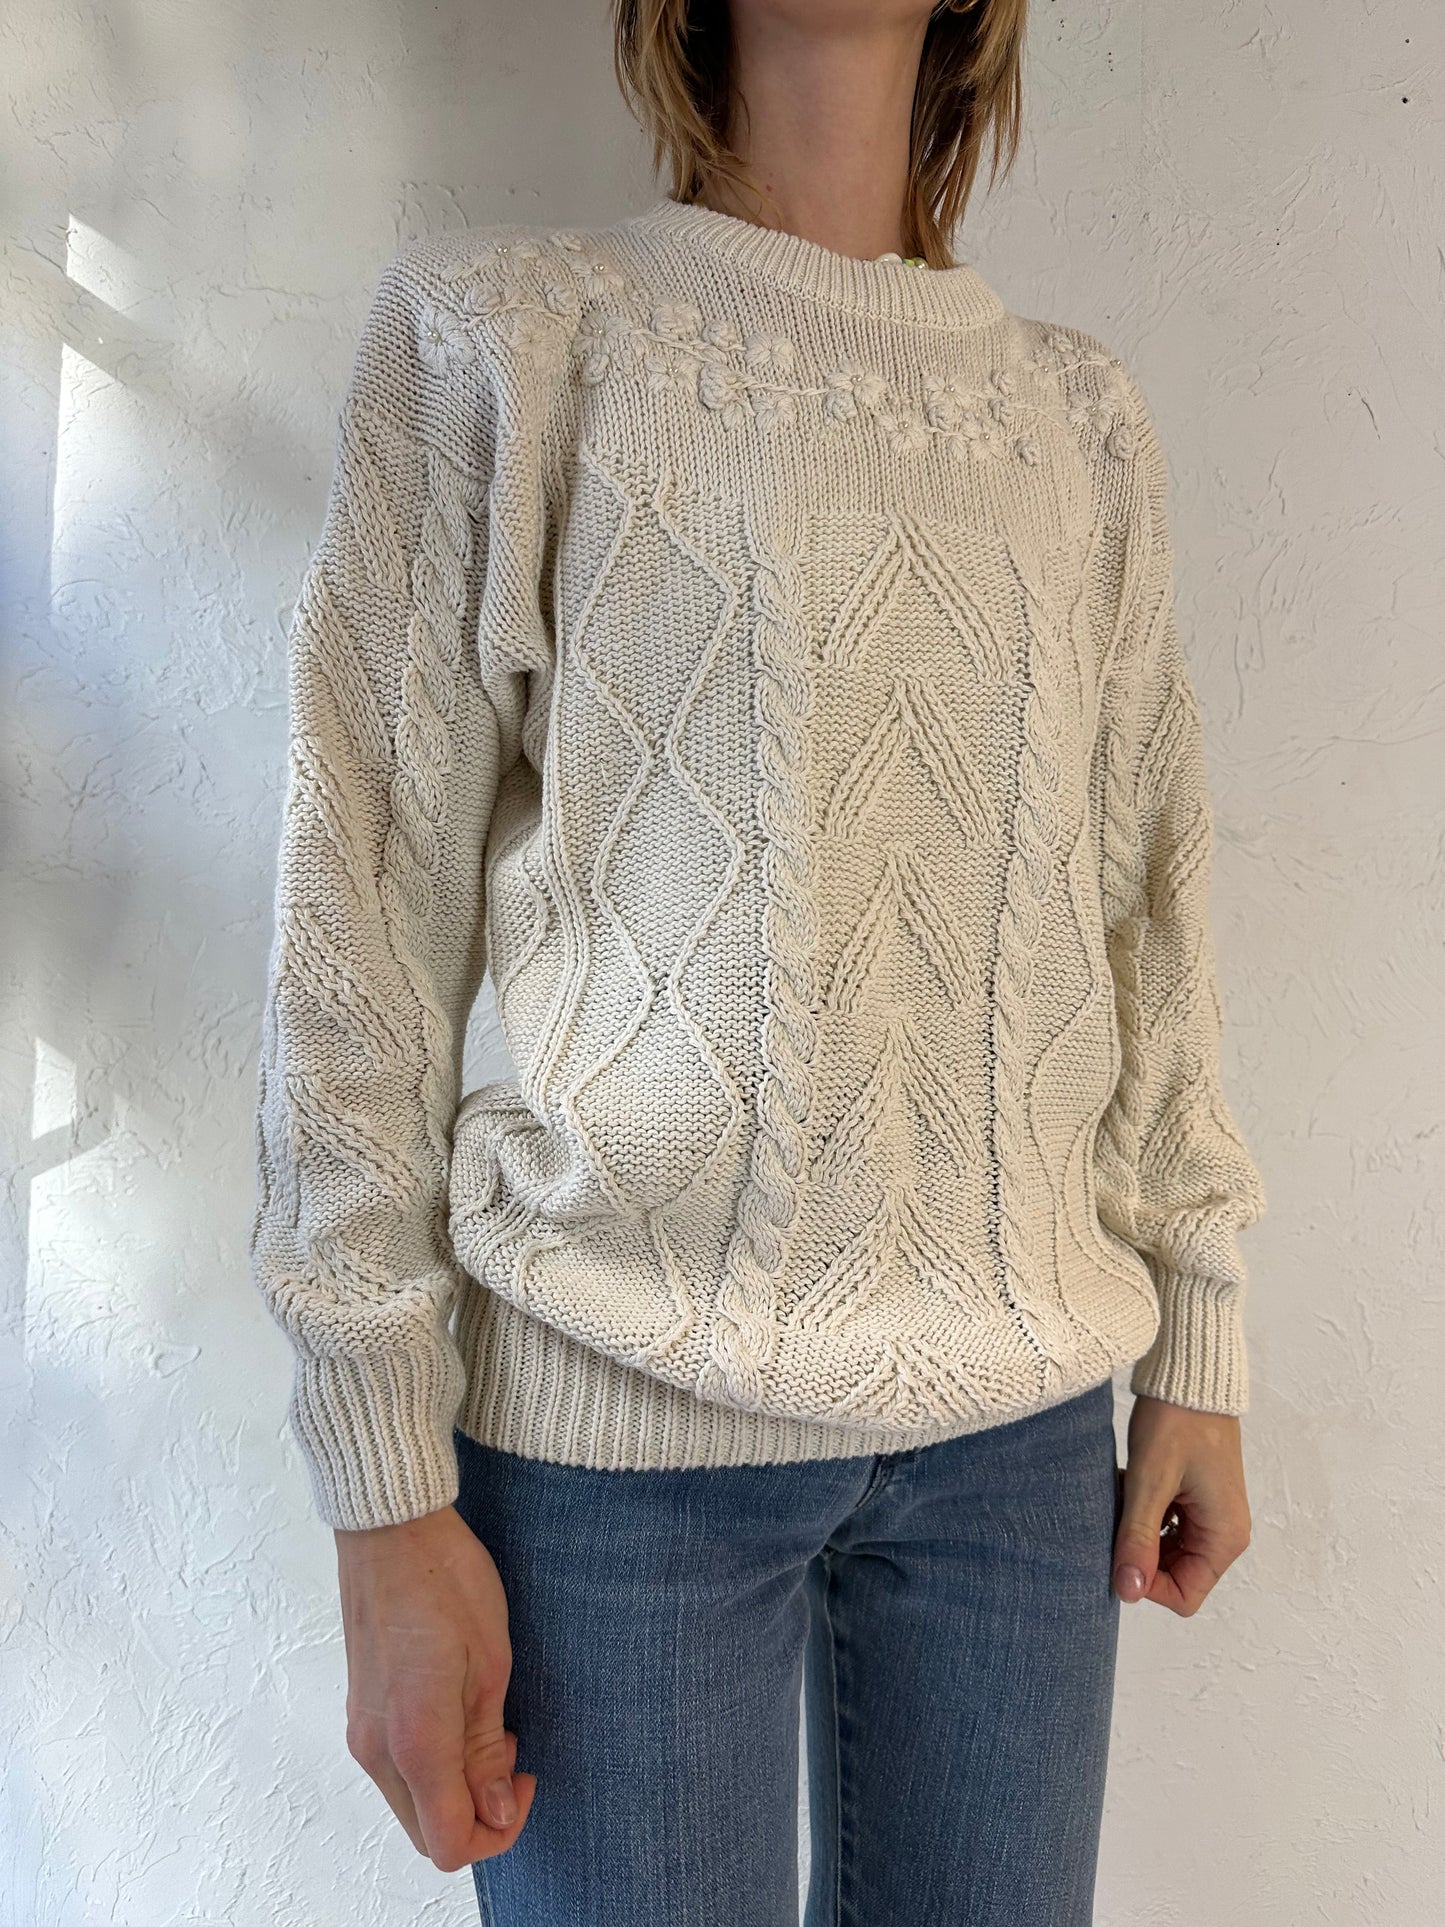 Y2k 'Dana Scott' Cream Cotton Knit Sweater / Medium